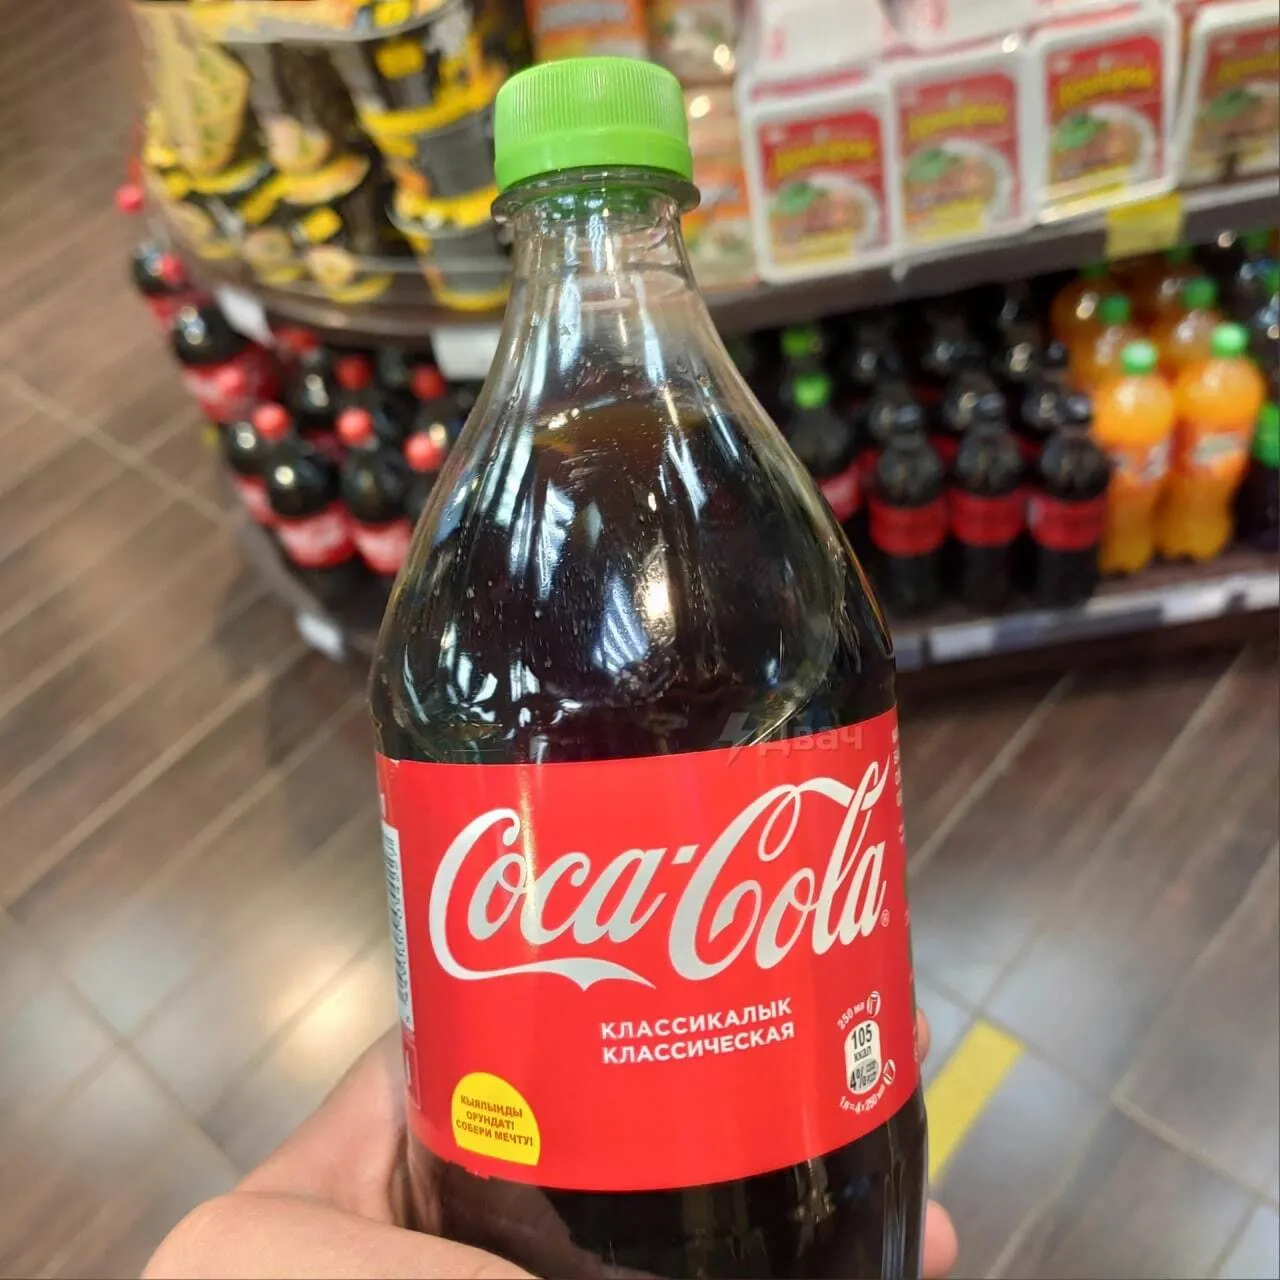      Coca-Cola qhiddzidiqheroz